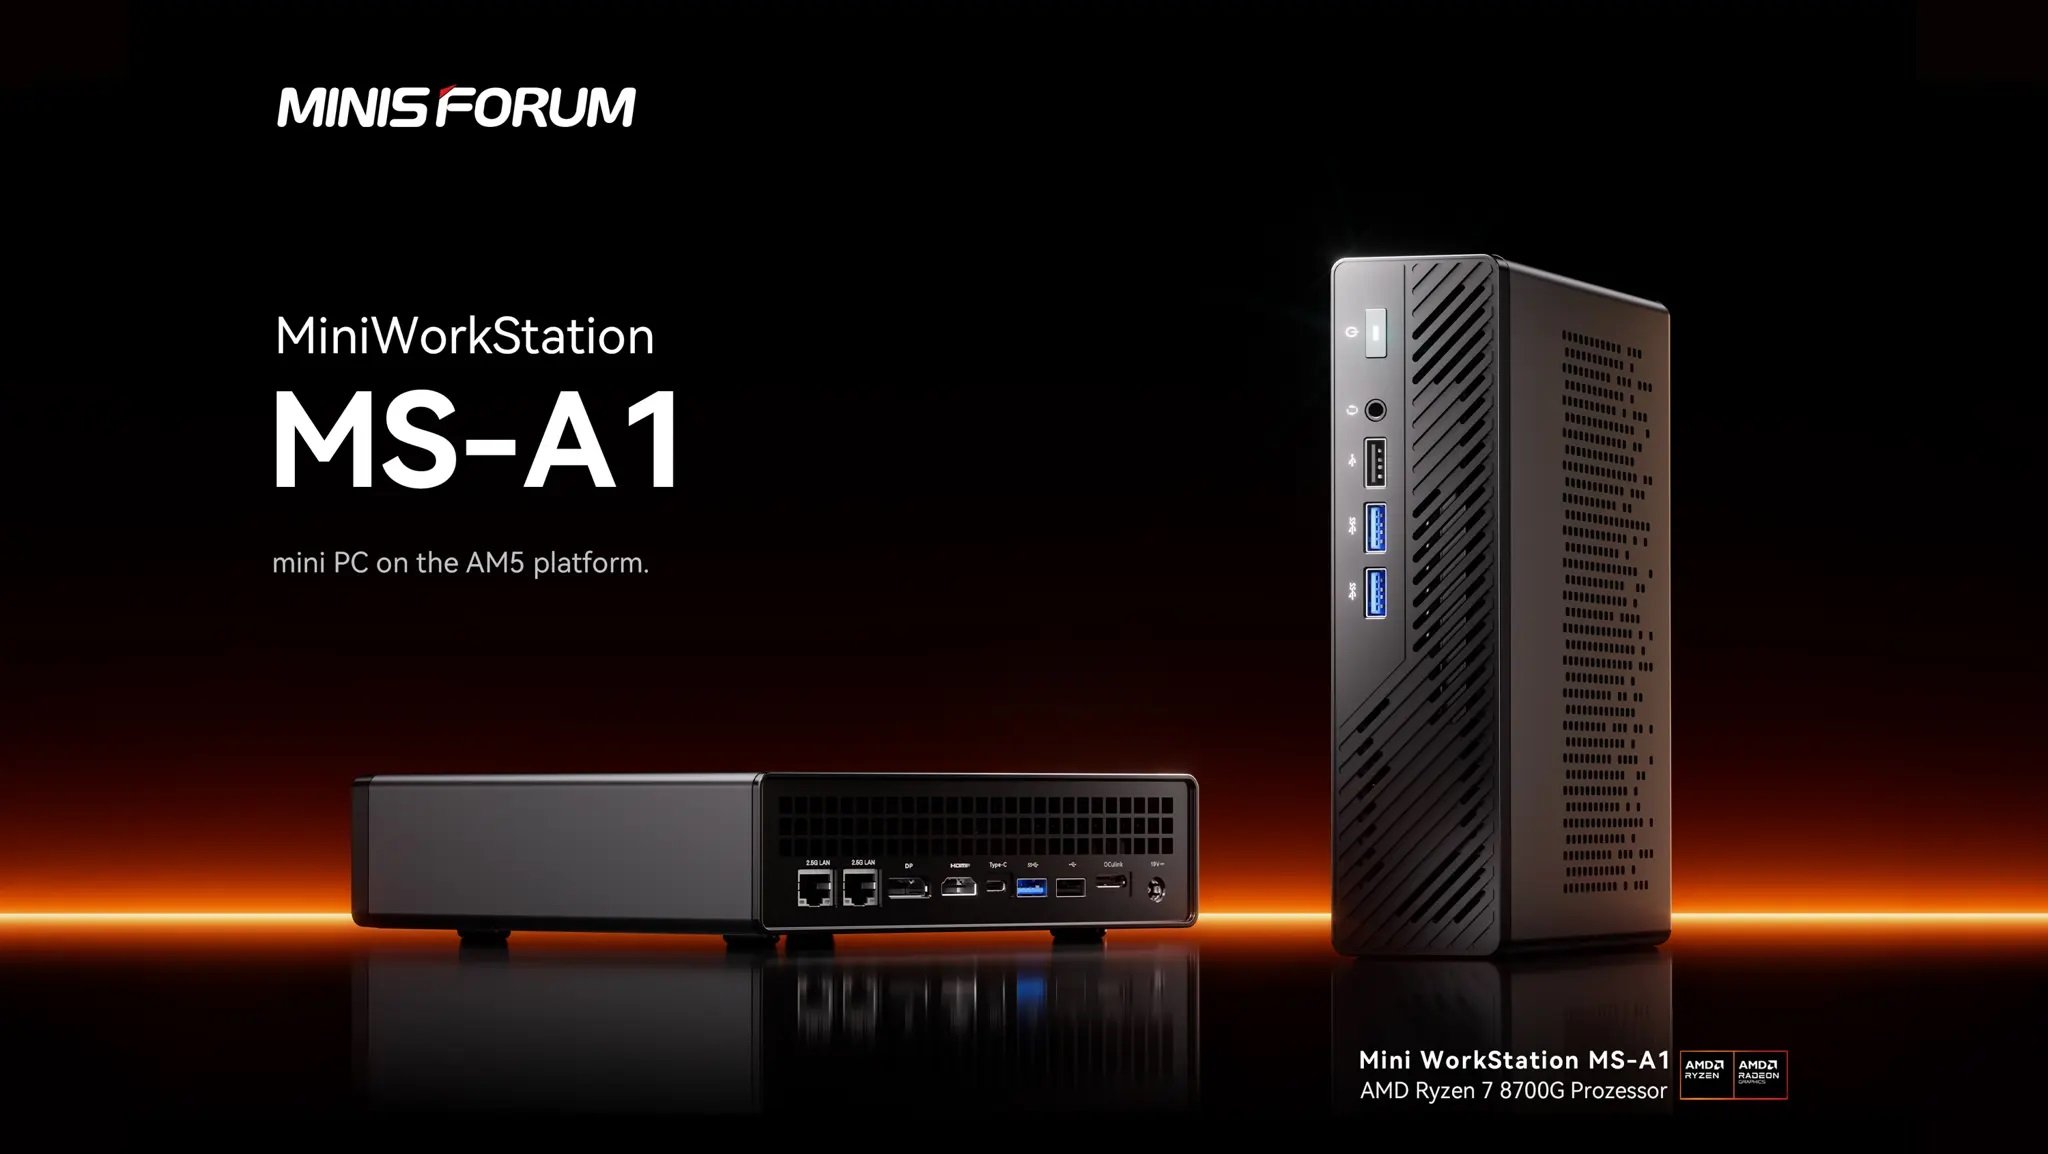 Minisforum MS-A1 Mini PC announced: The Ultimate AMD Ryzen Powerhouse with OCuLink Integration